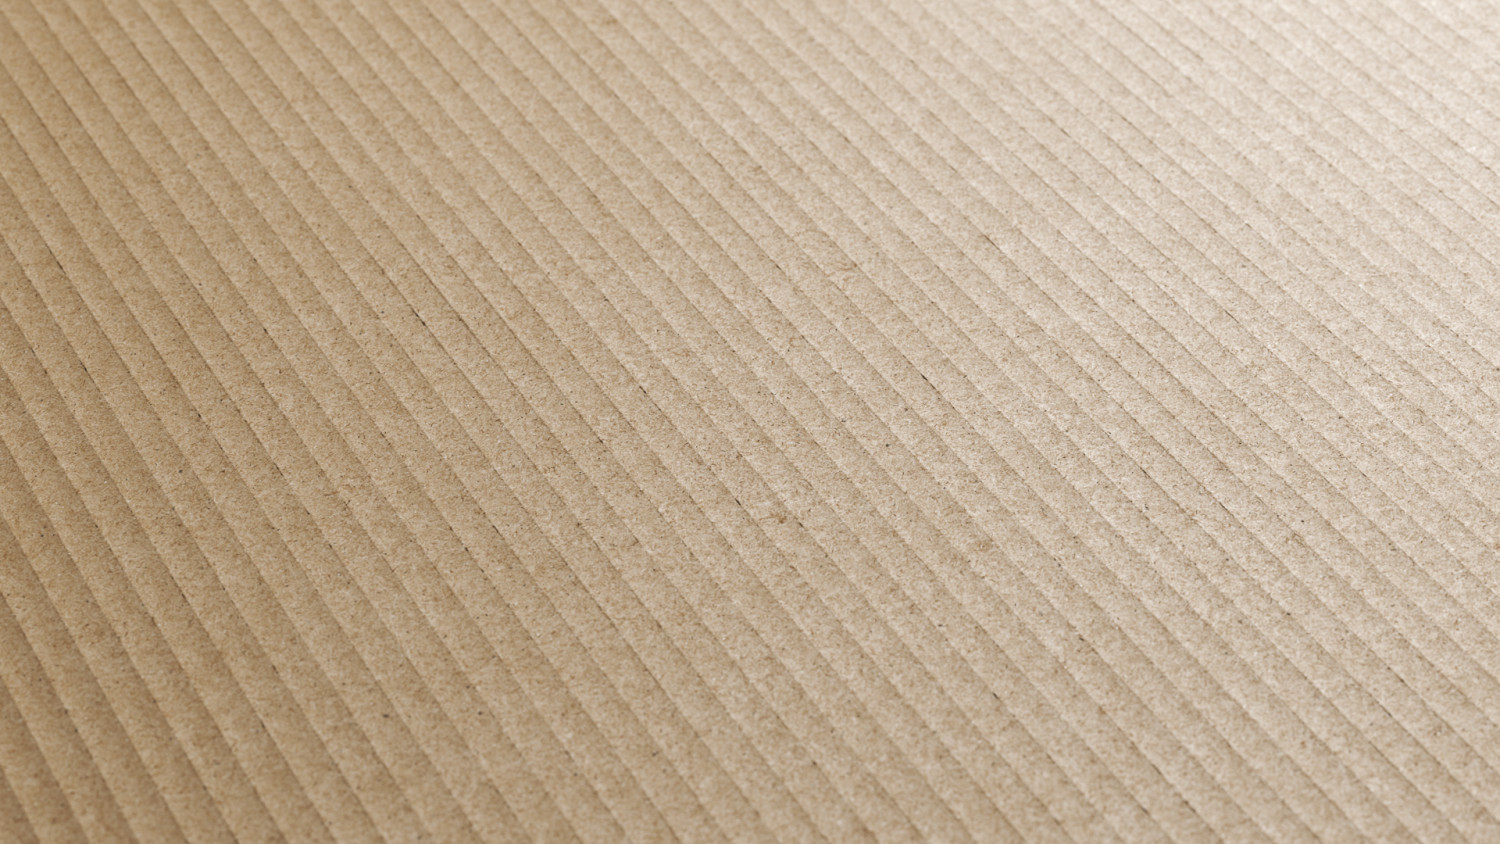 Corrugated fiberboard texture